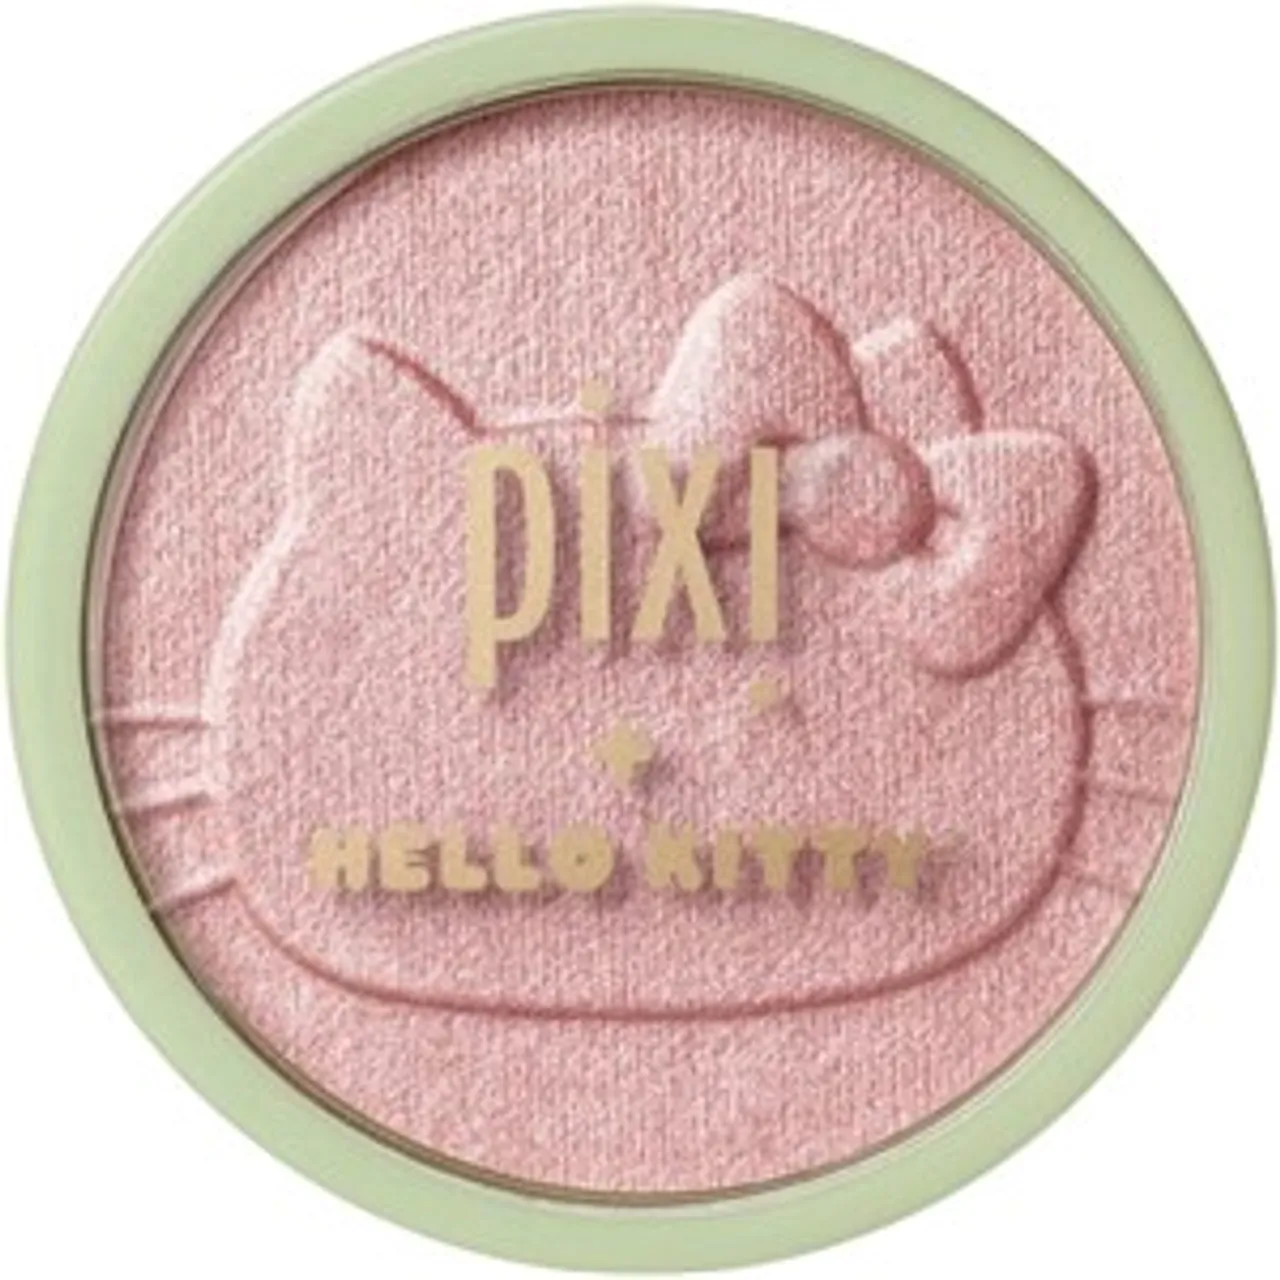 Pixi Hello Kitty Highlighting Pressed Powder Female 10 g